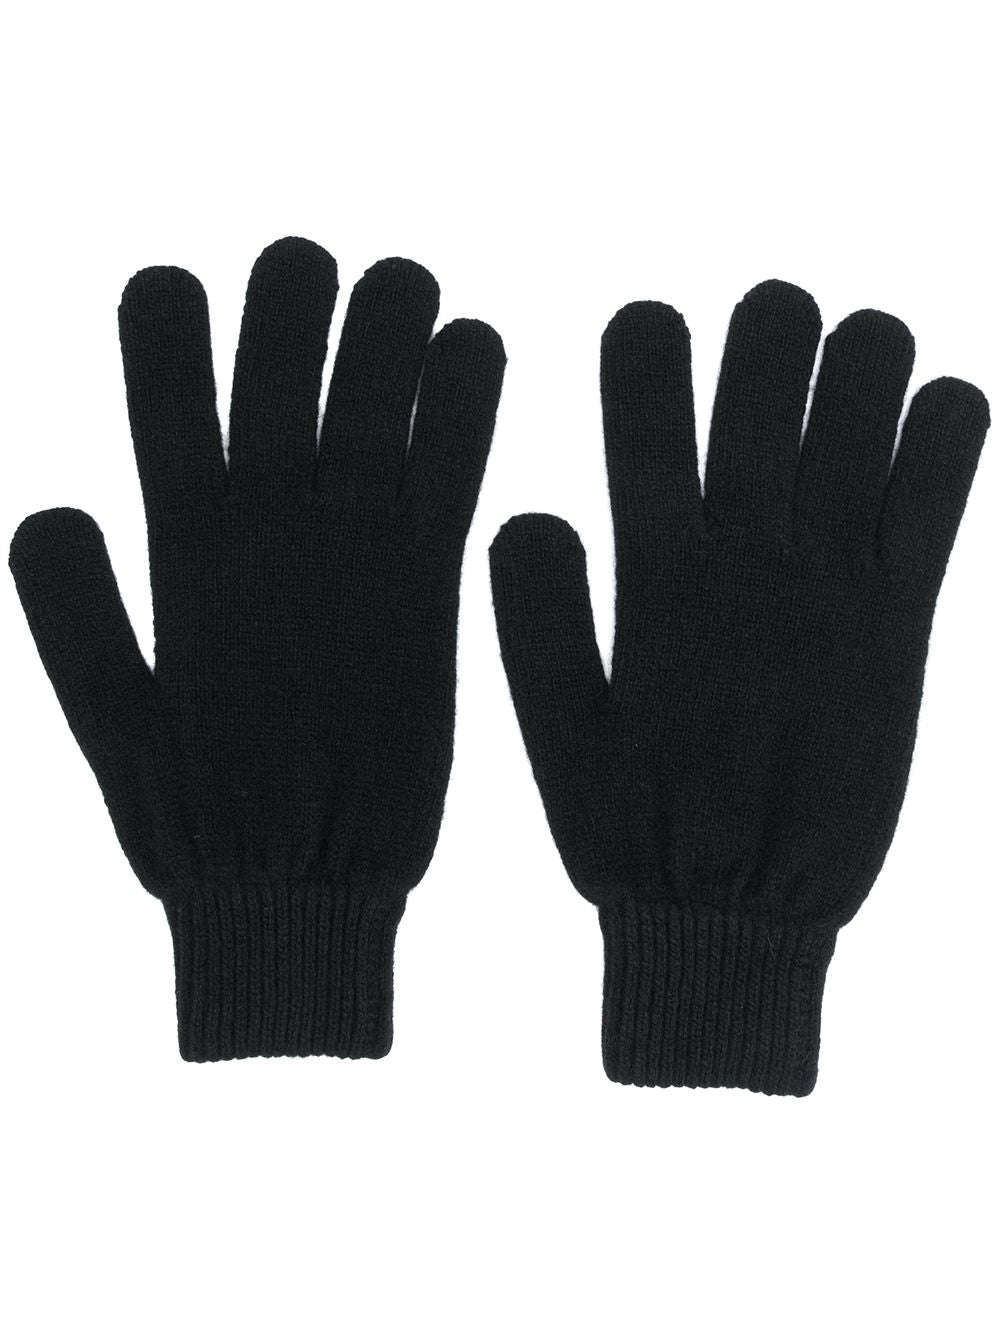 Paul Smith Gloves Black